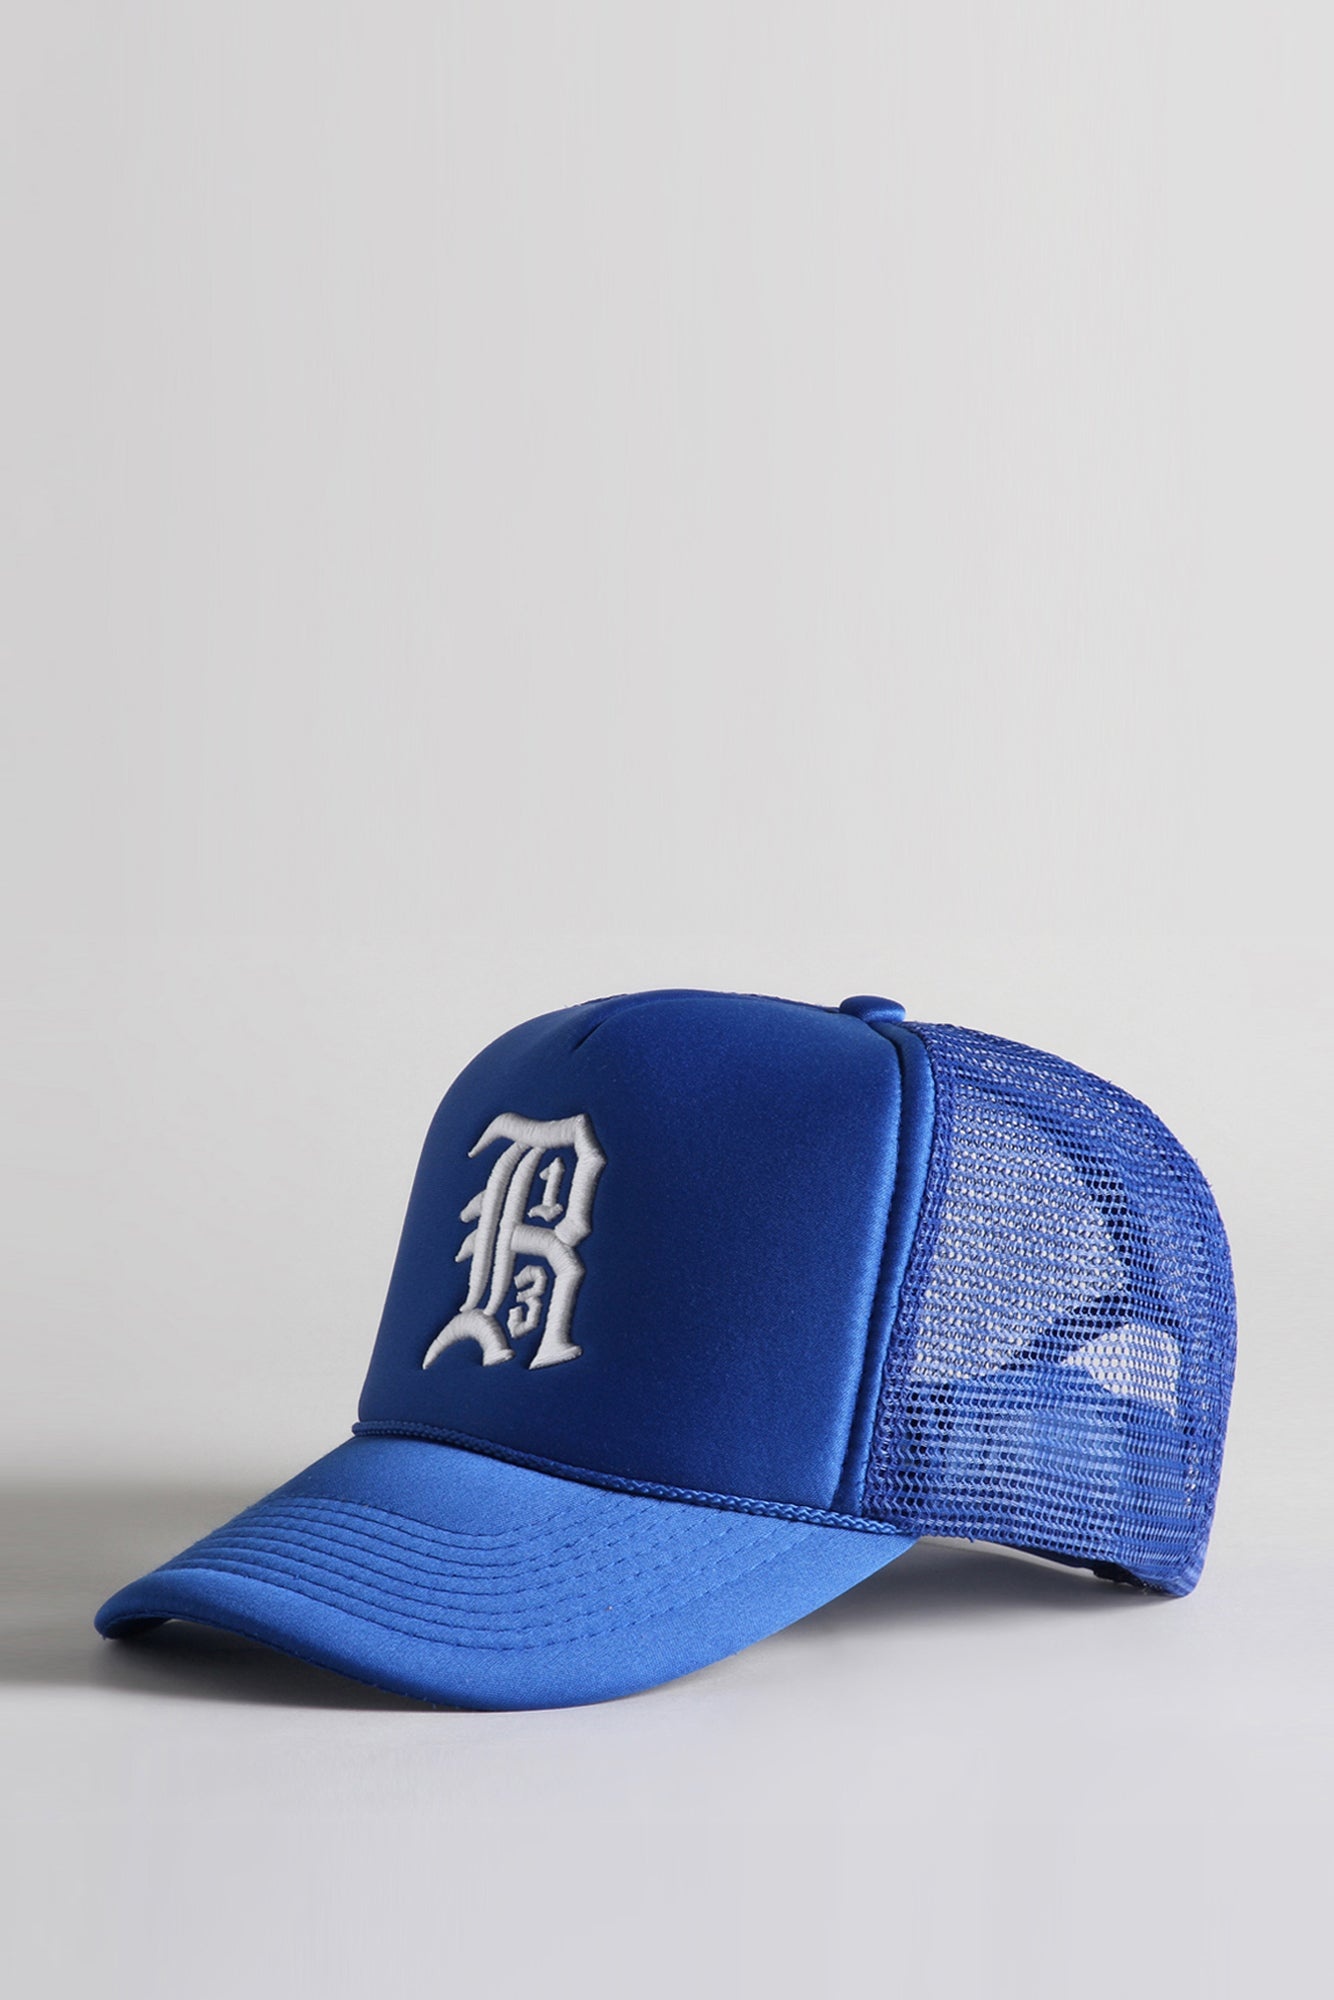 R13 Trucker Hat - Blue | R13 Denim Official Site - 1